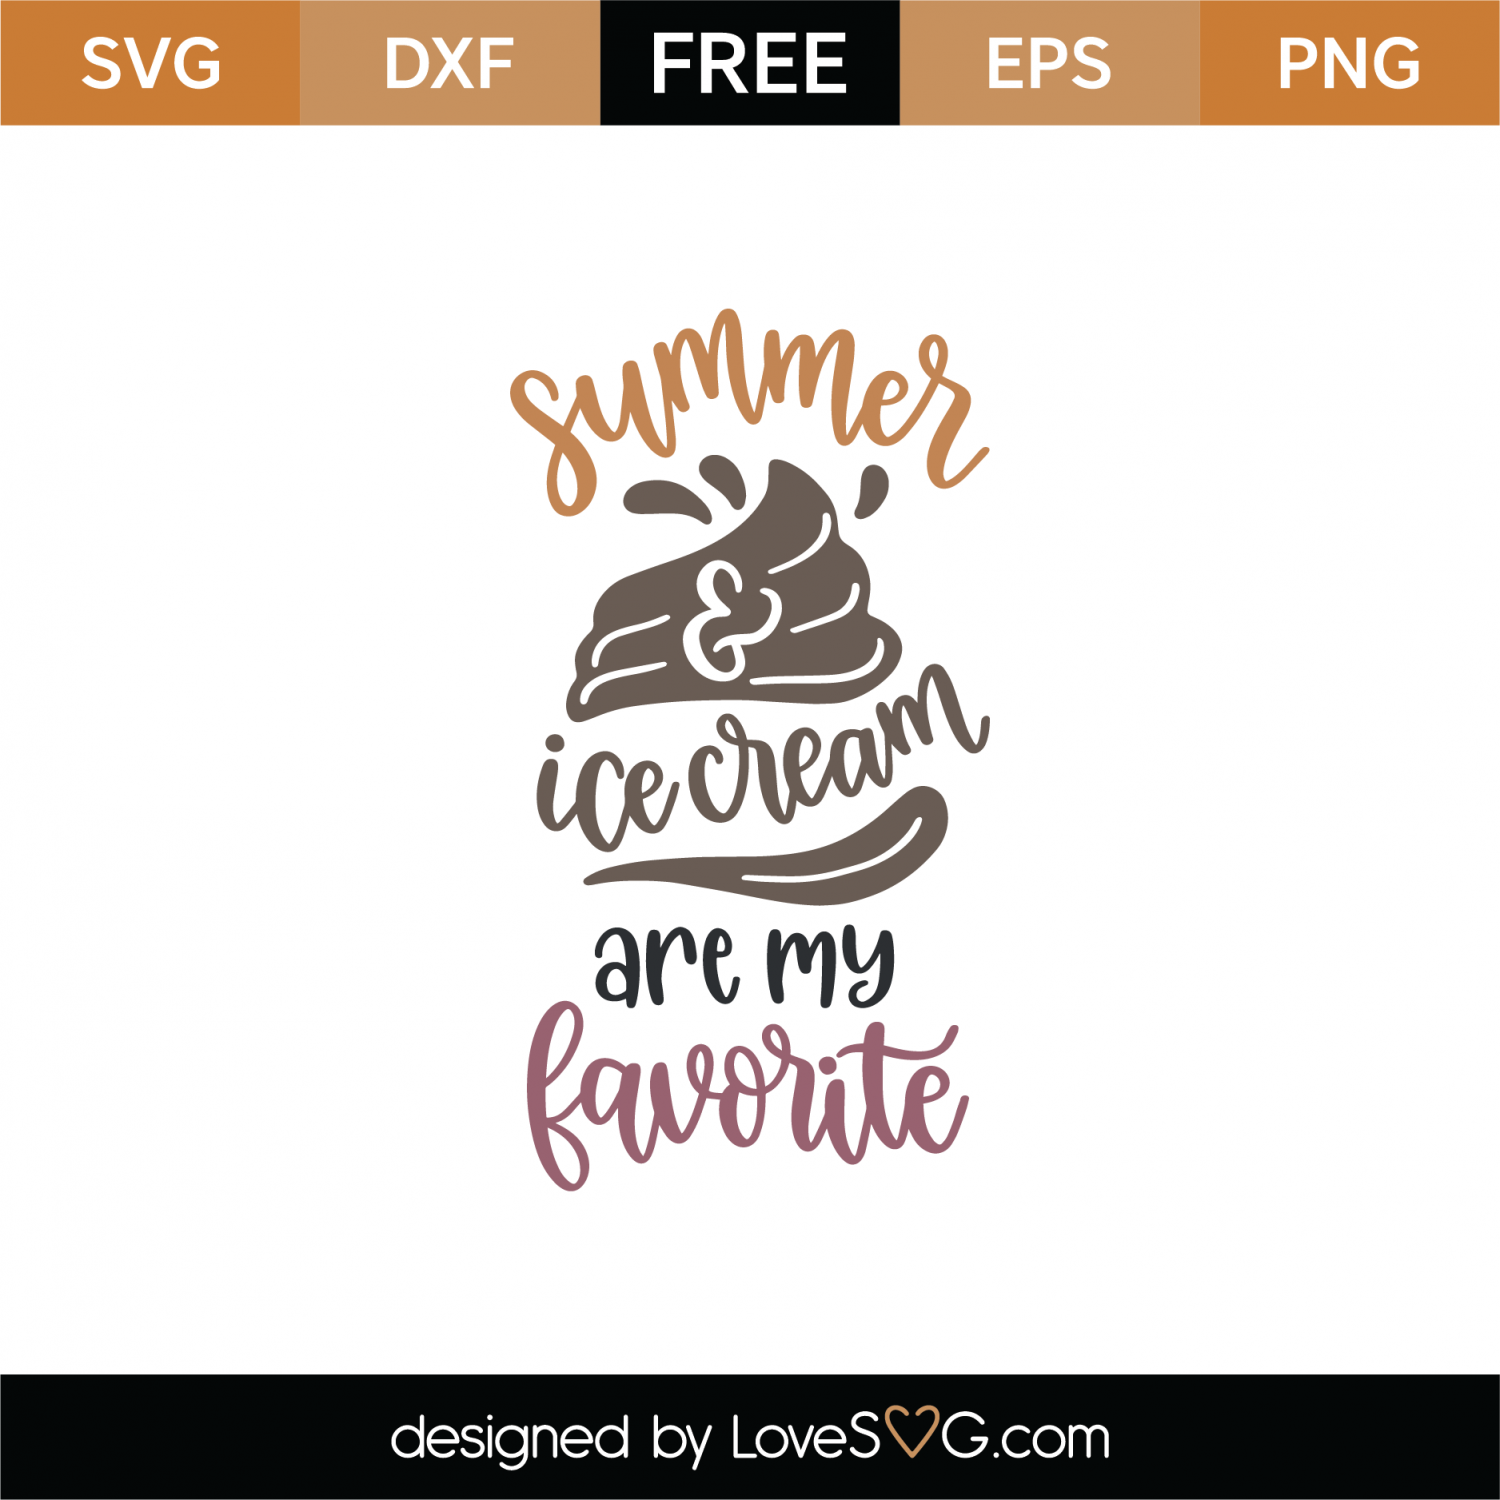 Download Free Summer and Ice Cream SVG Cut File | Lovesvg.com